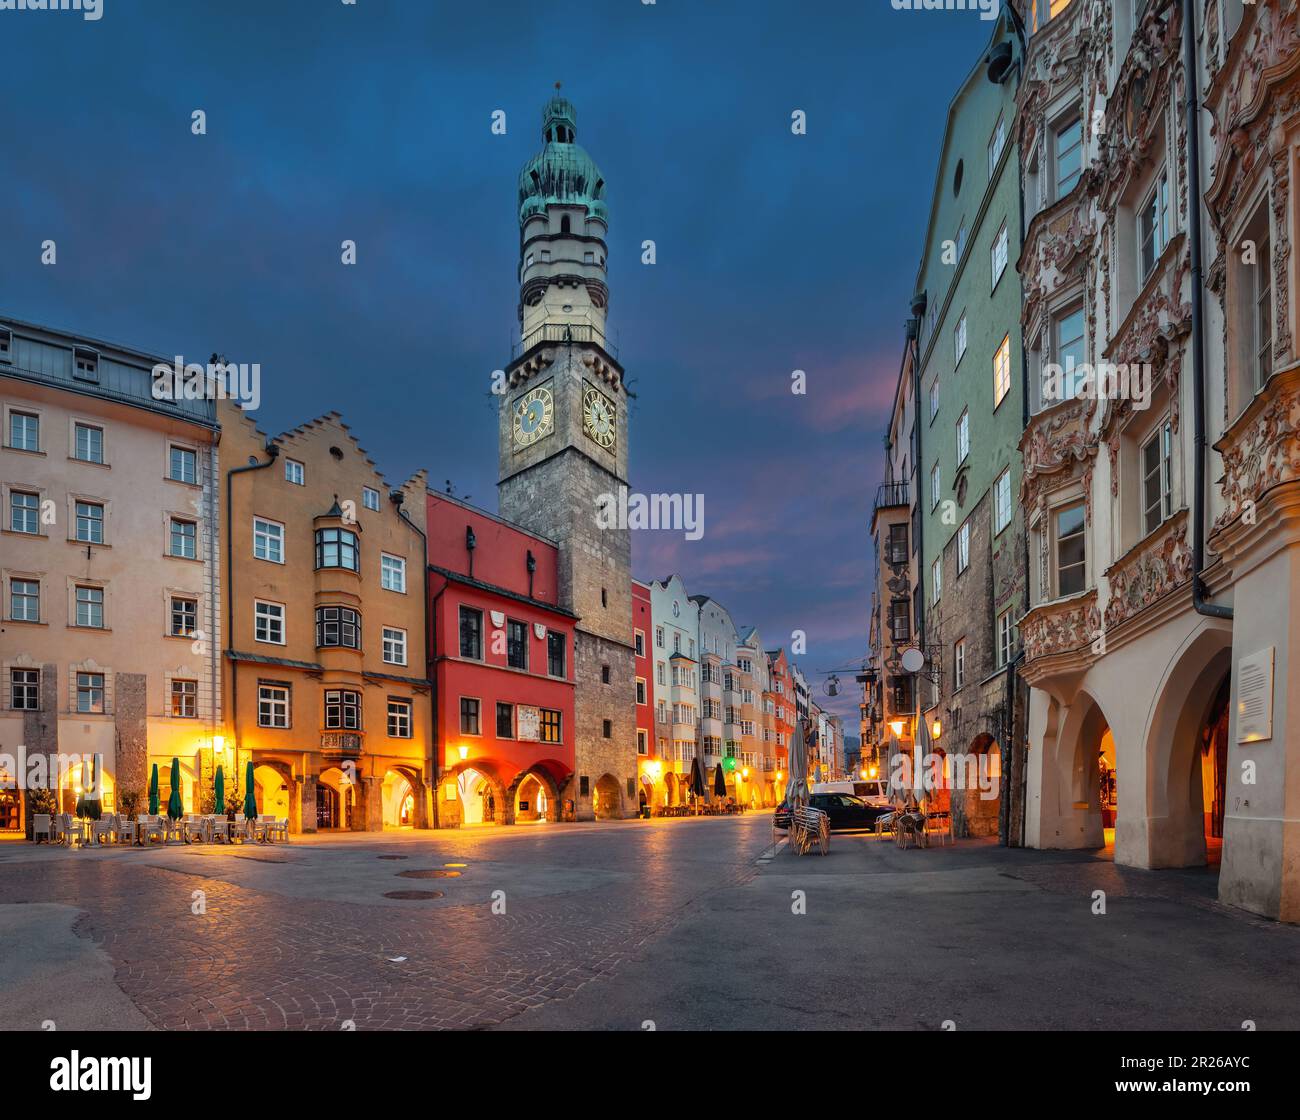 Innsbruck, Austria - view of historic Stadtturm tower with clock at dusk Stock Photo